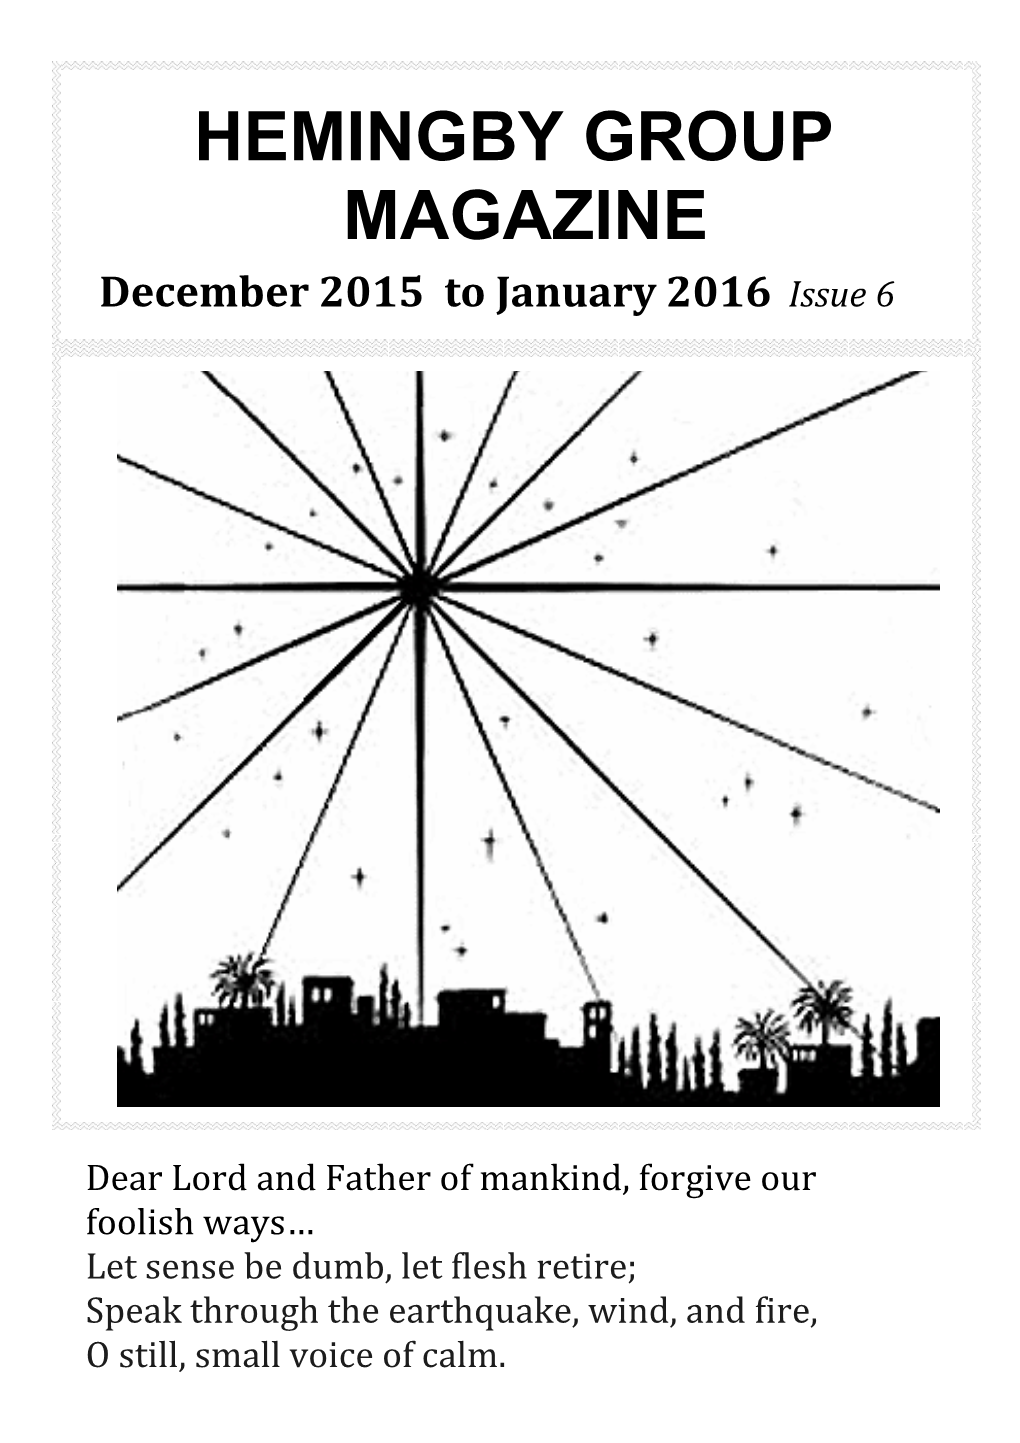 HEMINGBY GROUP MAGAZINE December 2015 to January 2016 Issue 6